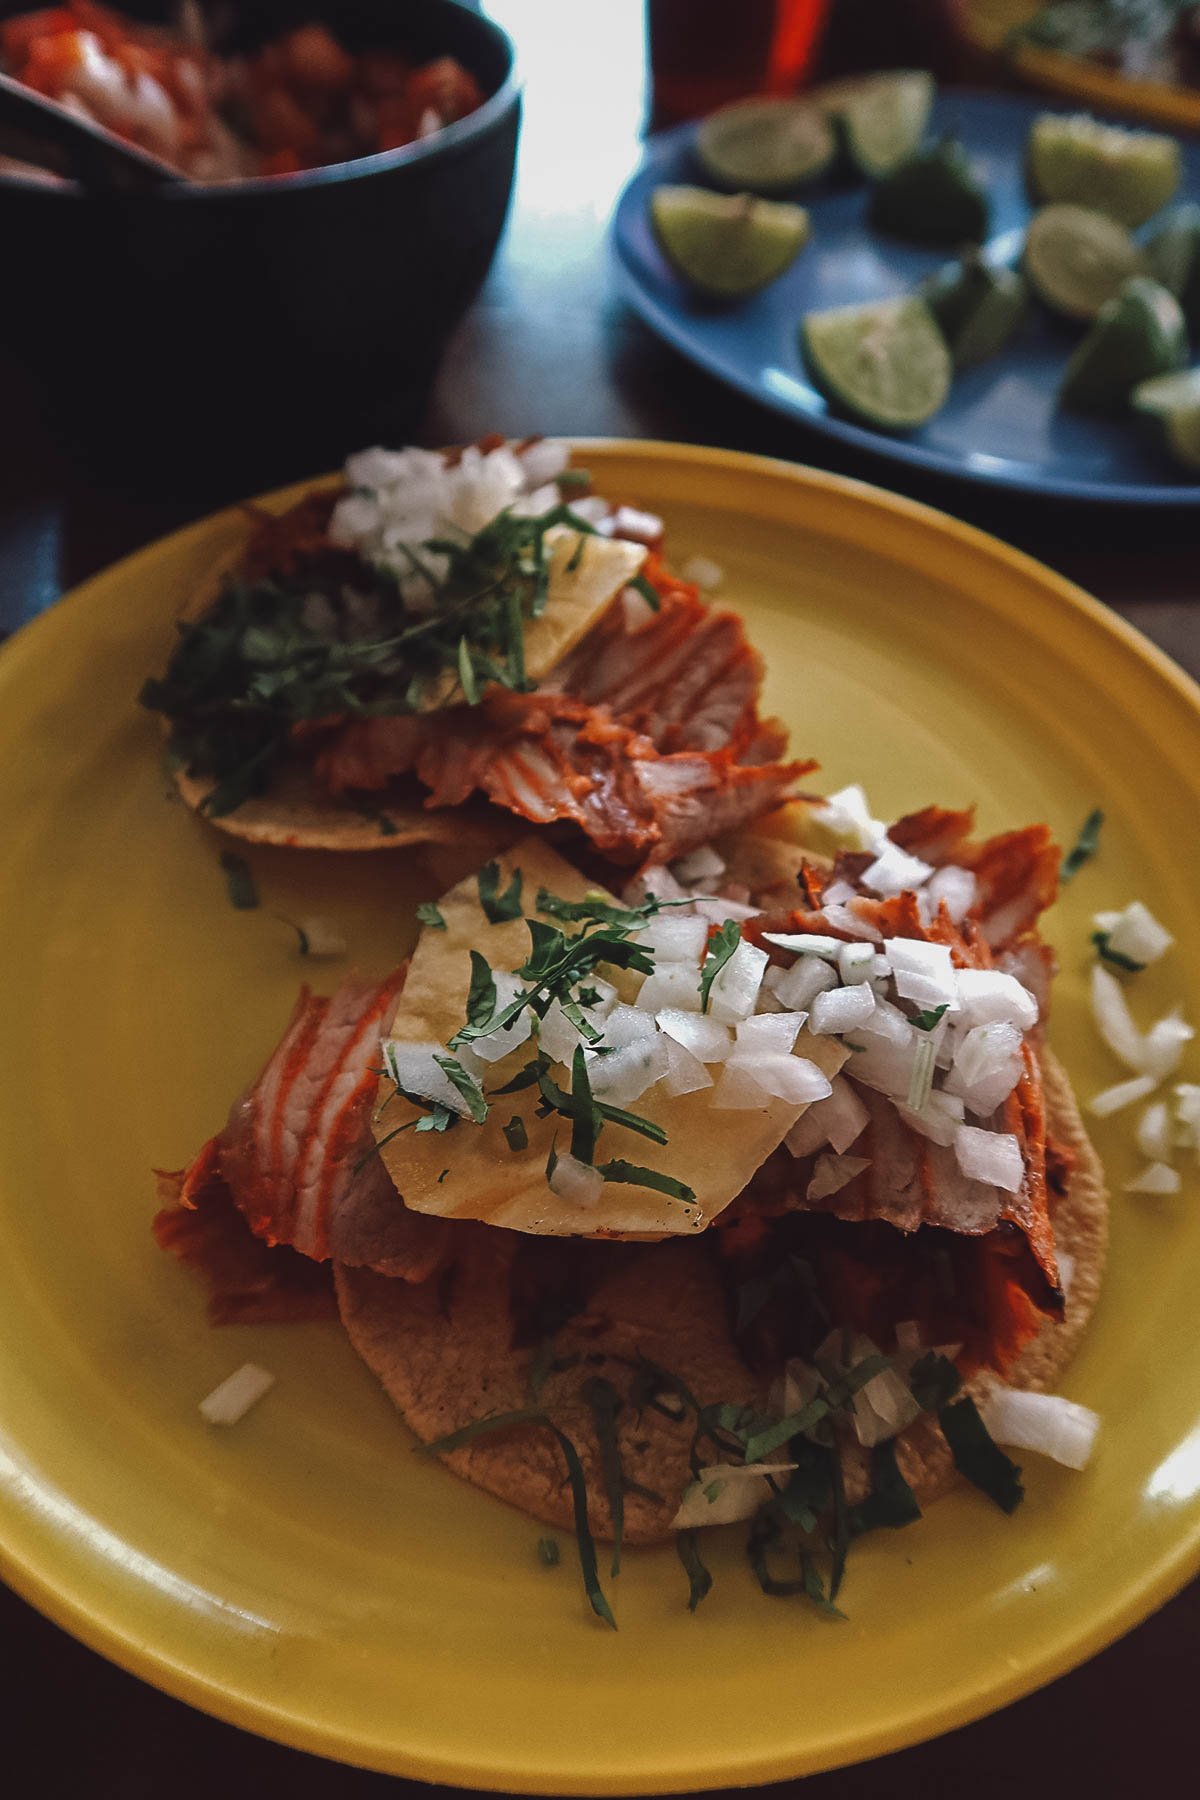 Tacos al pastor at a restaurant in Mexico City